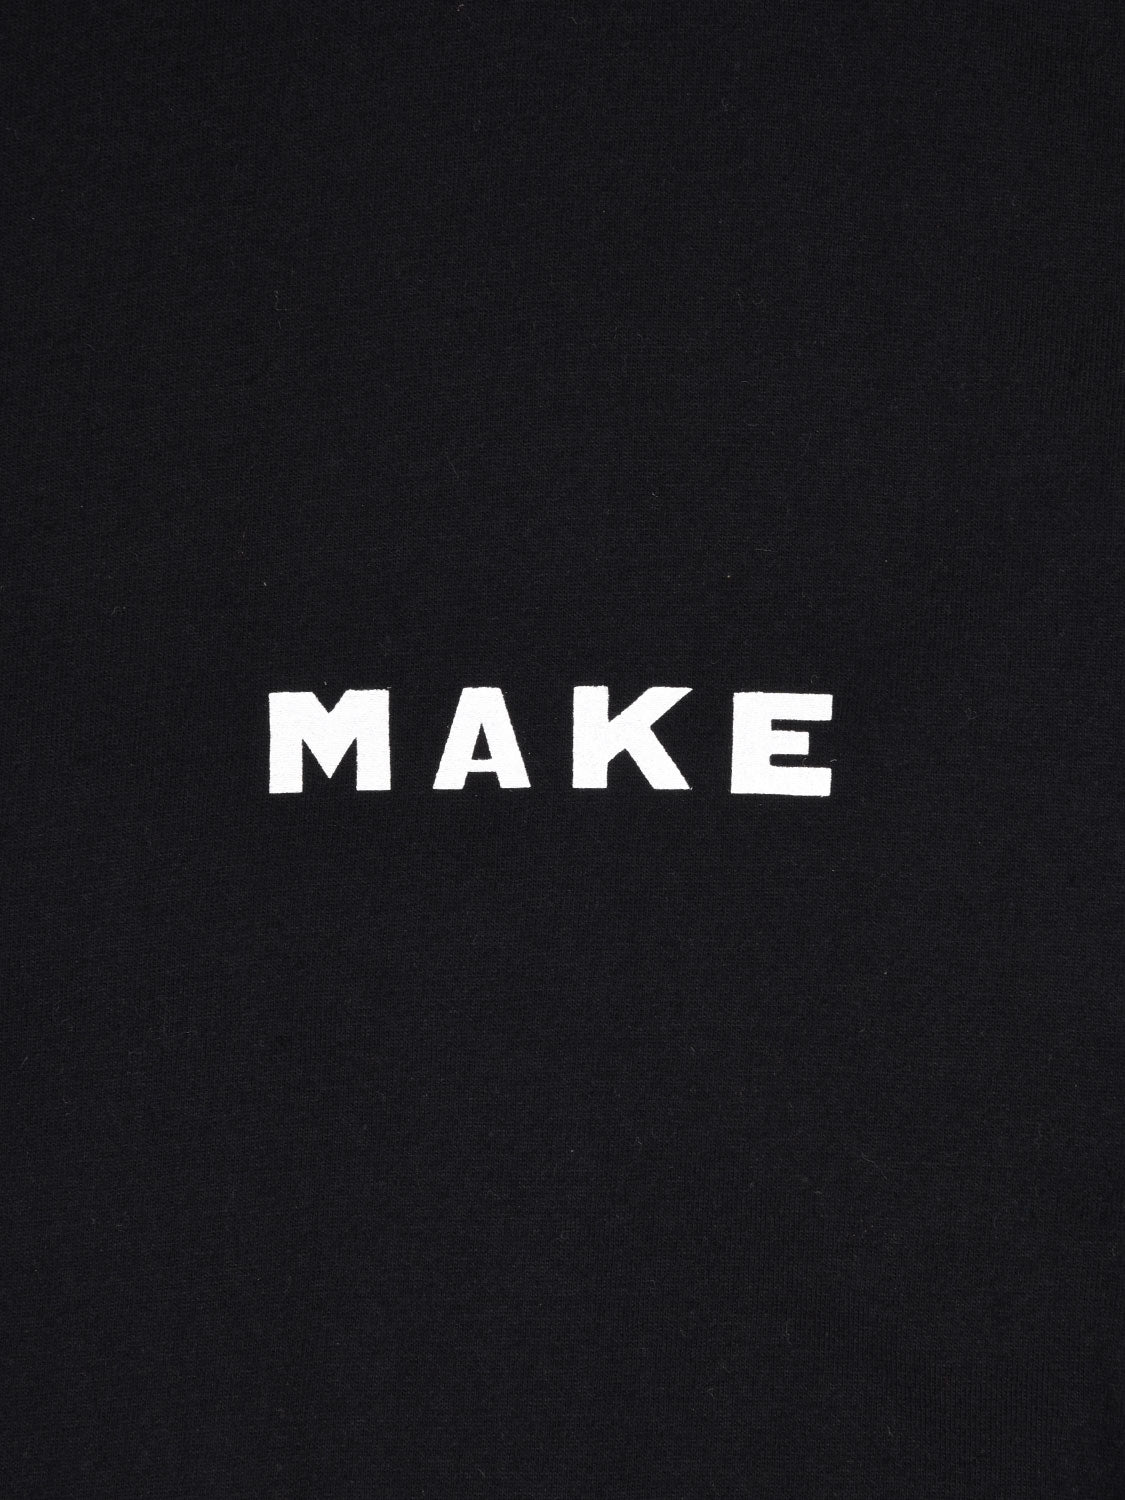 Make Logo Black Graphic Longsleeve T-Shirt